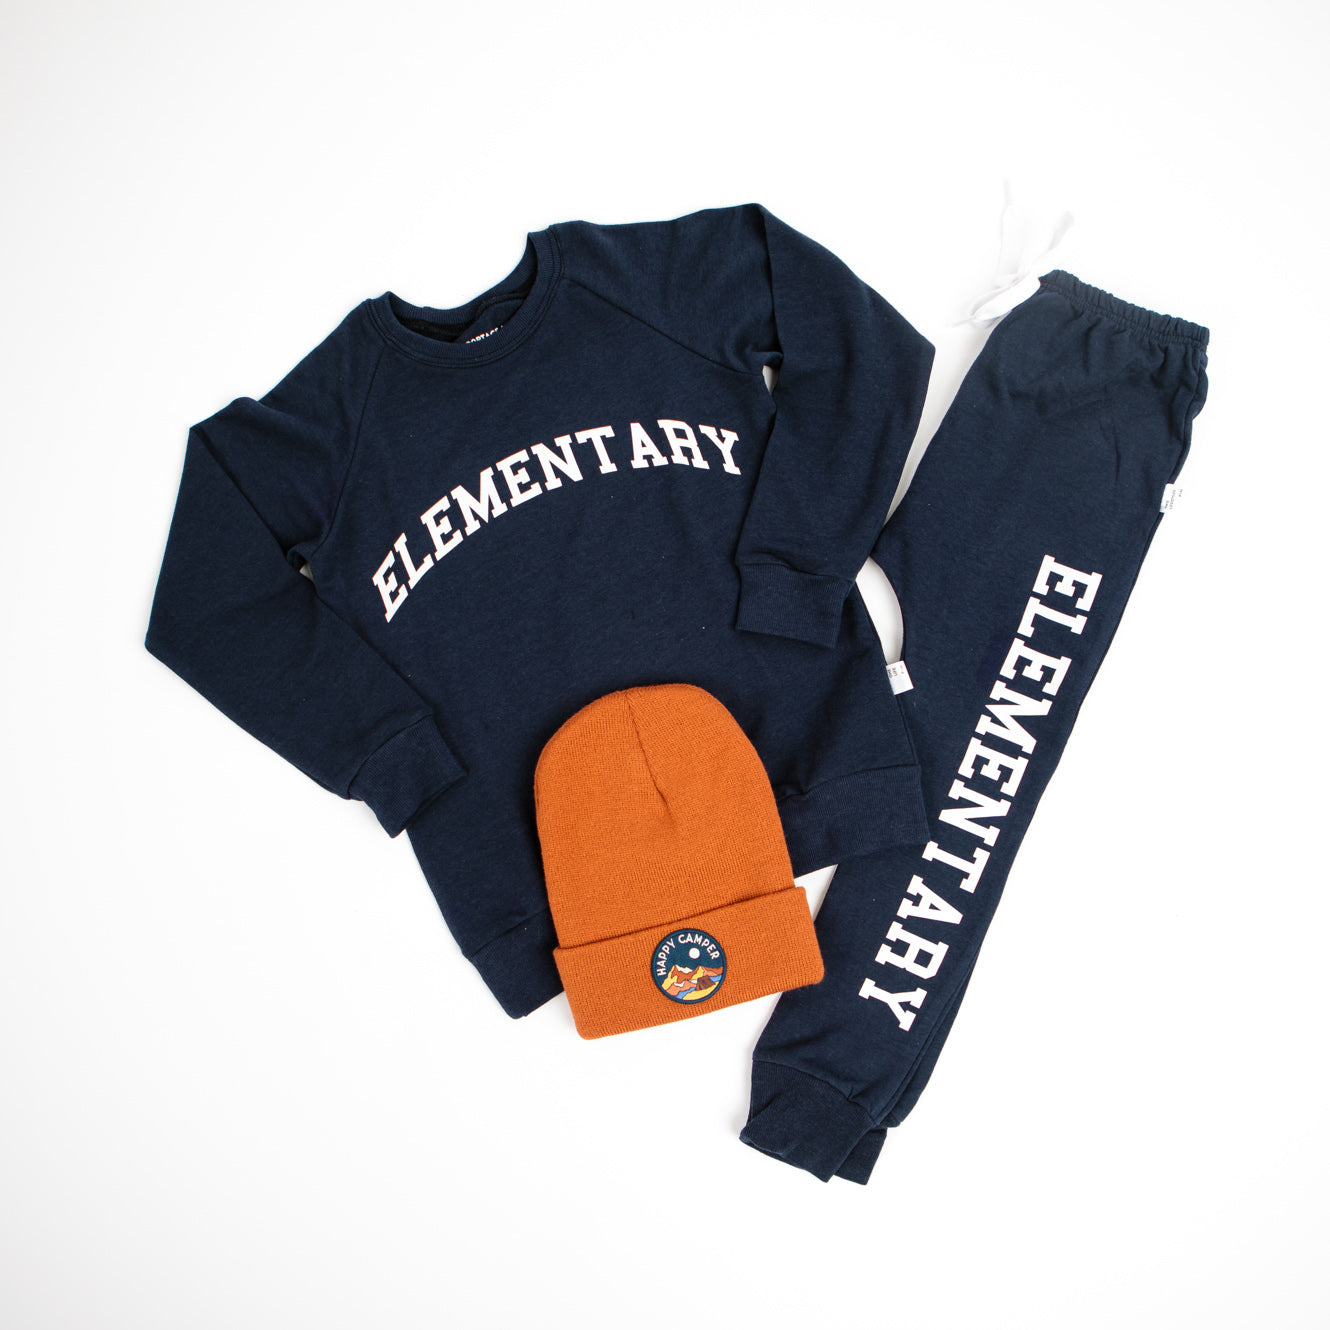 Elementary Sweatshirt - Navy